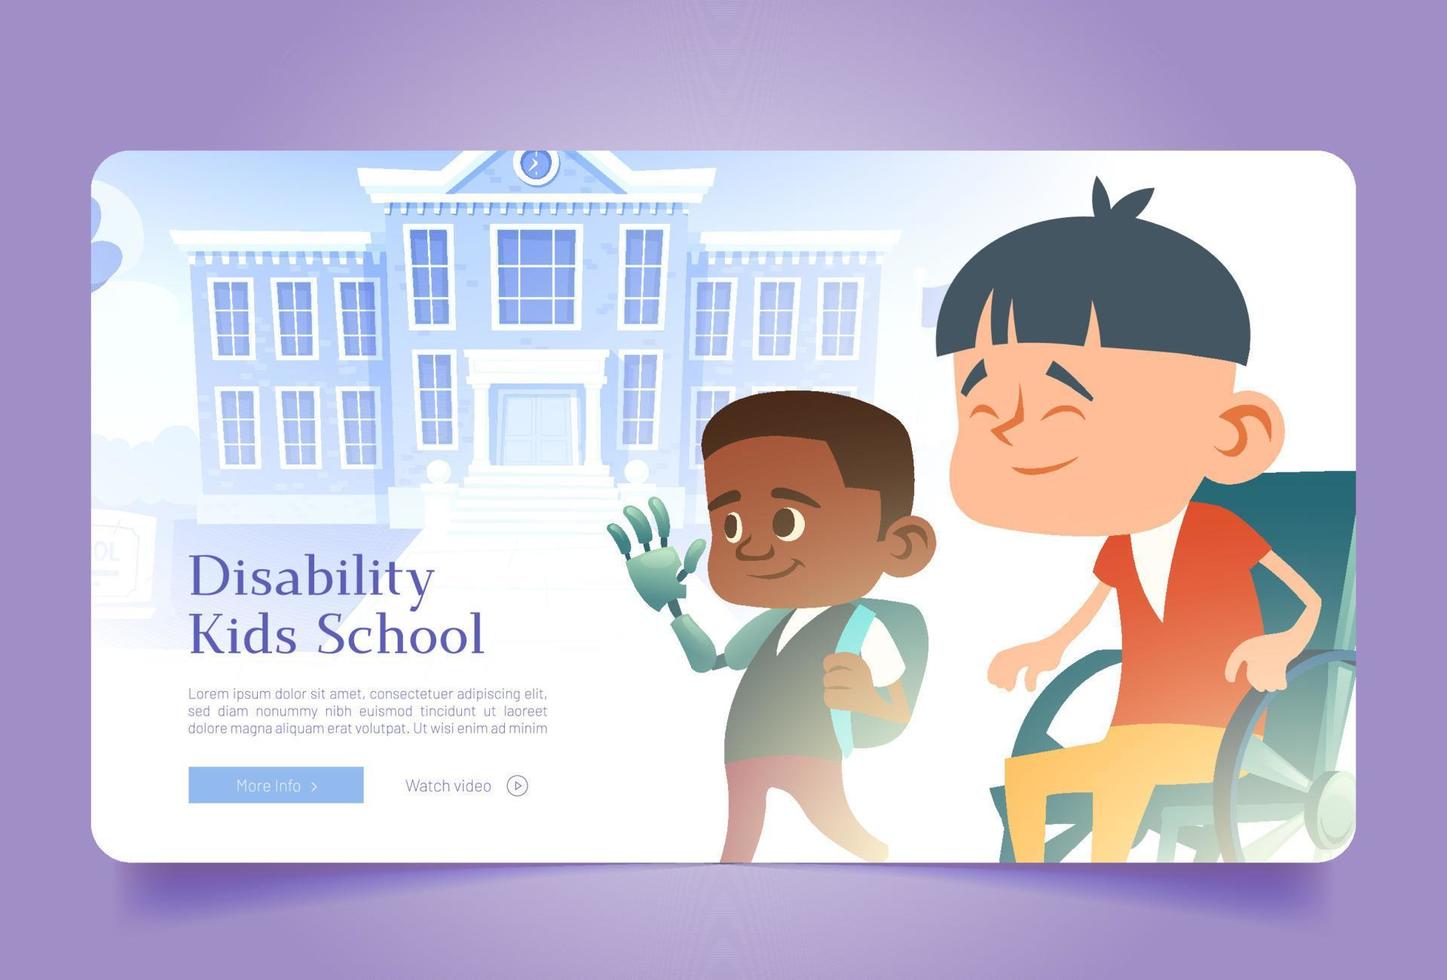 Disability kids school web banner with children vector